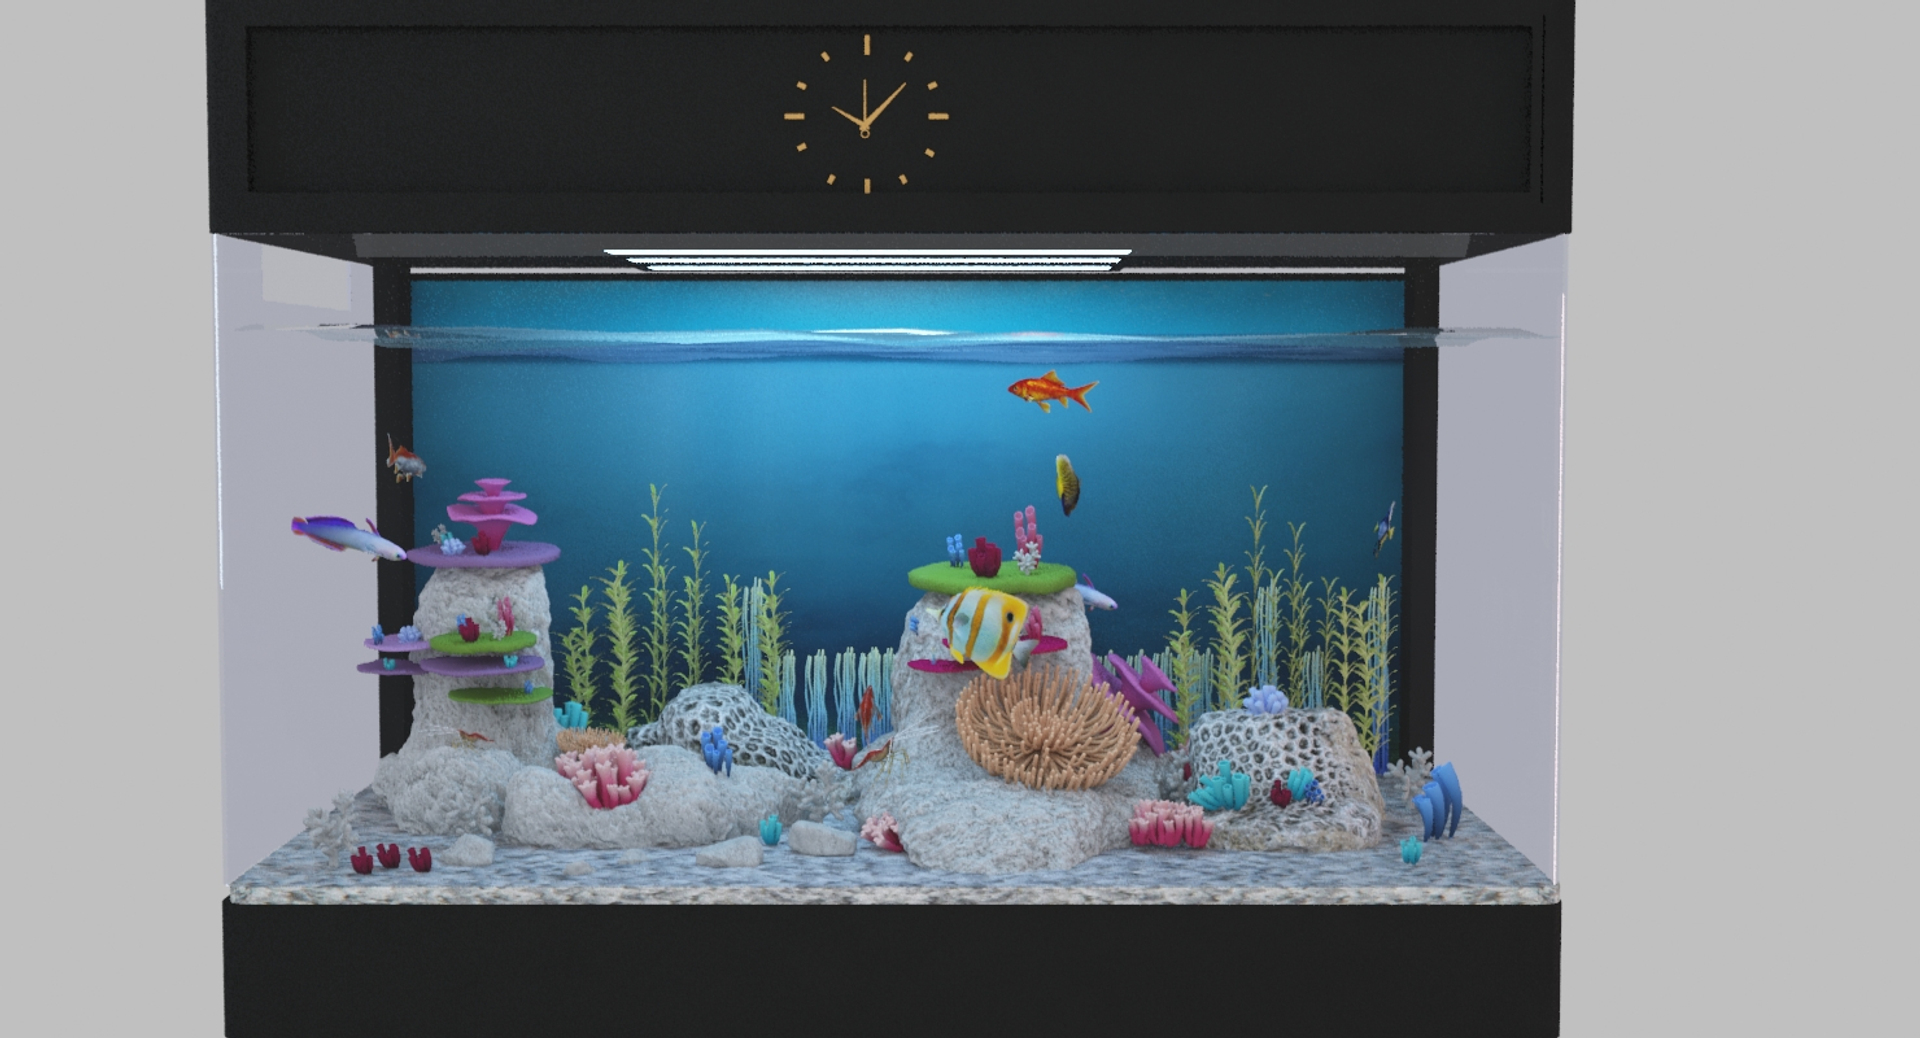 4,467 Aquatic Animals Box Images, Stock Photos, 3D objects